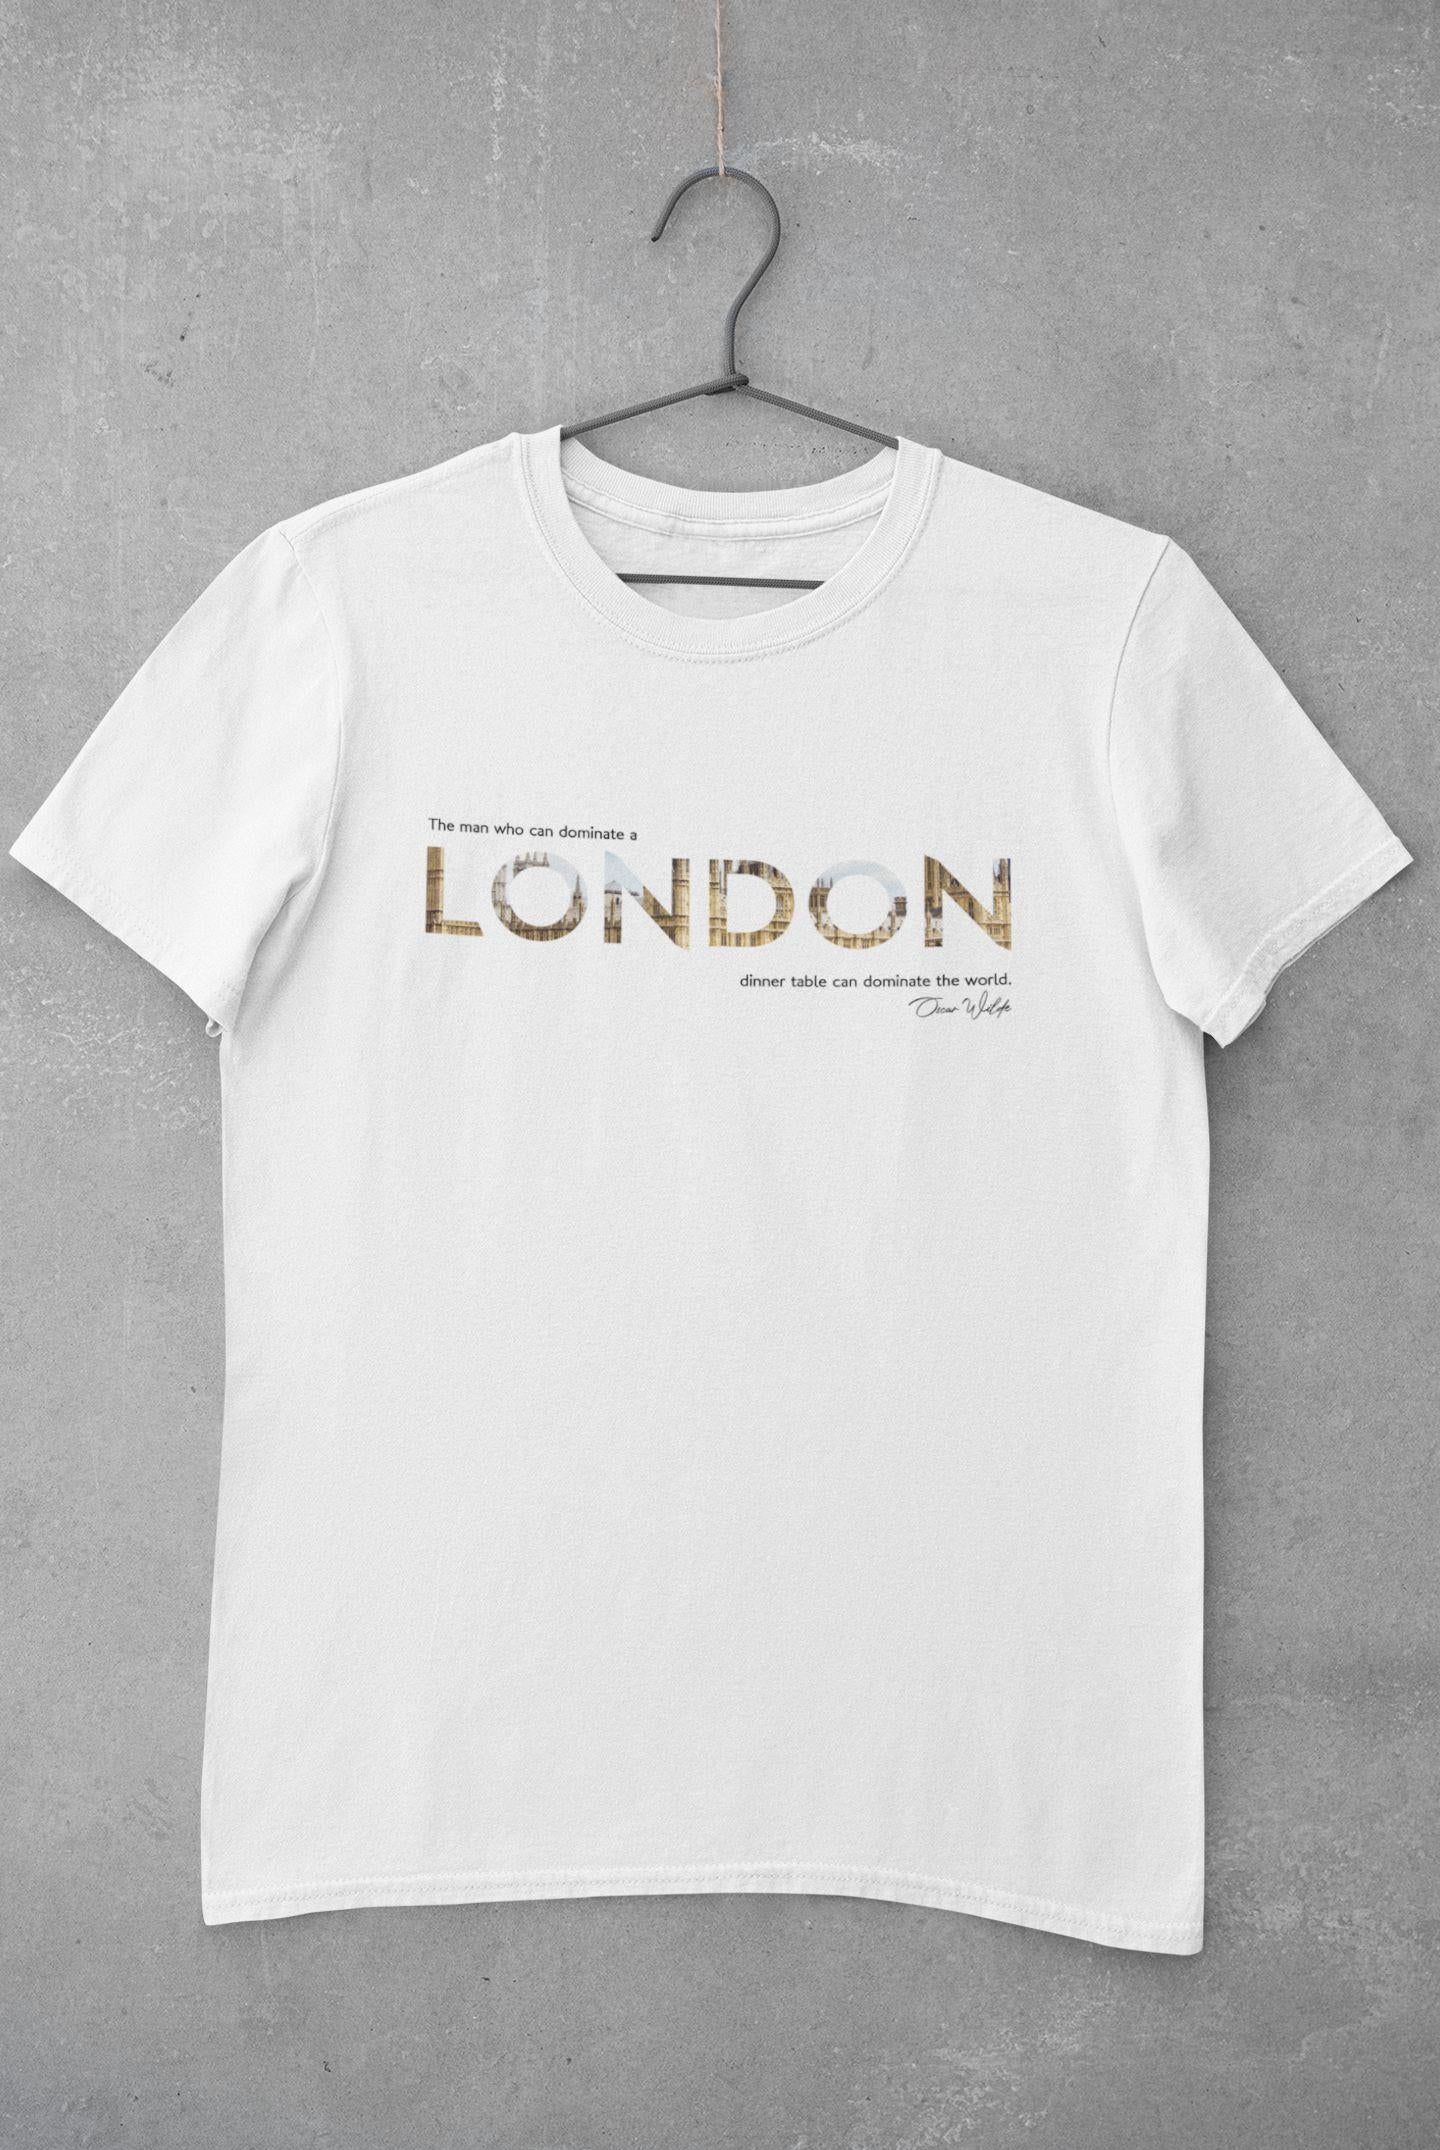 London graphic printed, cotton Crew Neck men's t -shirt